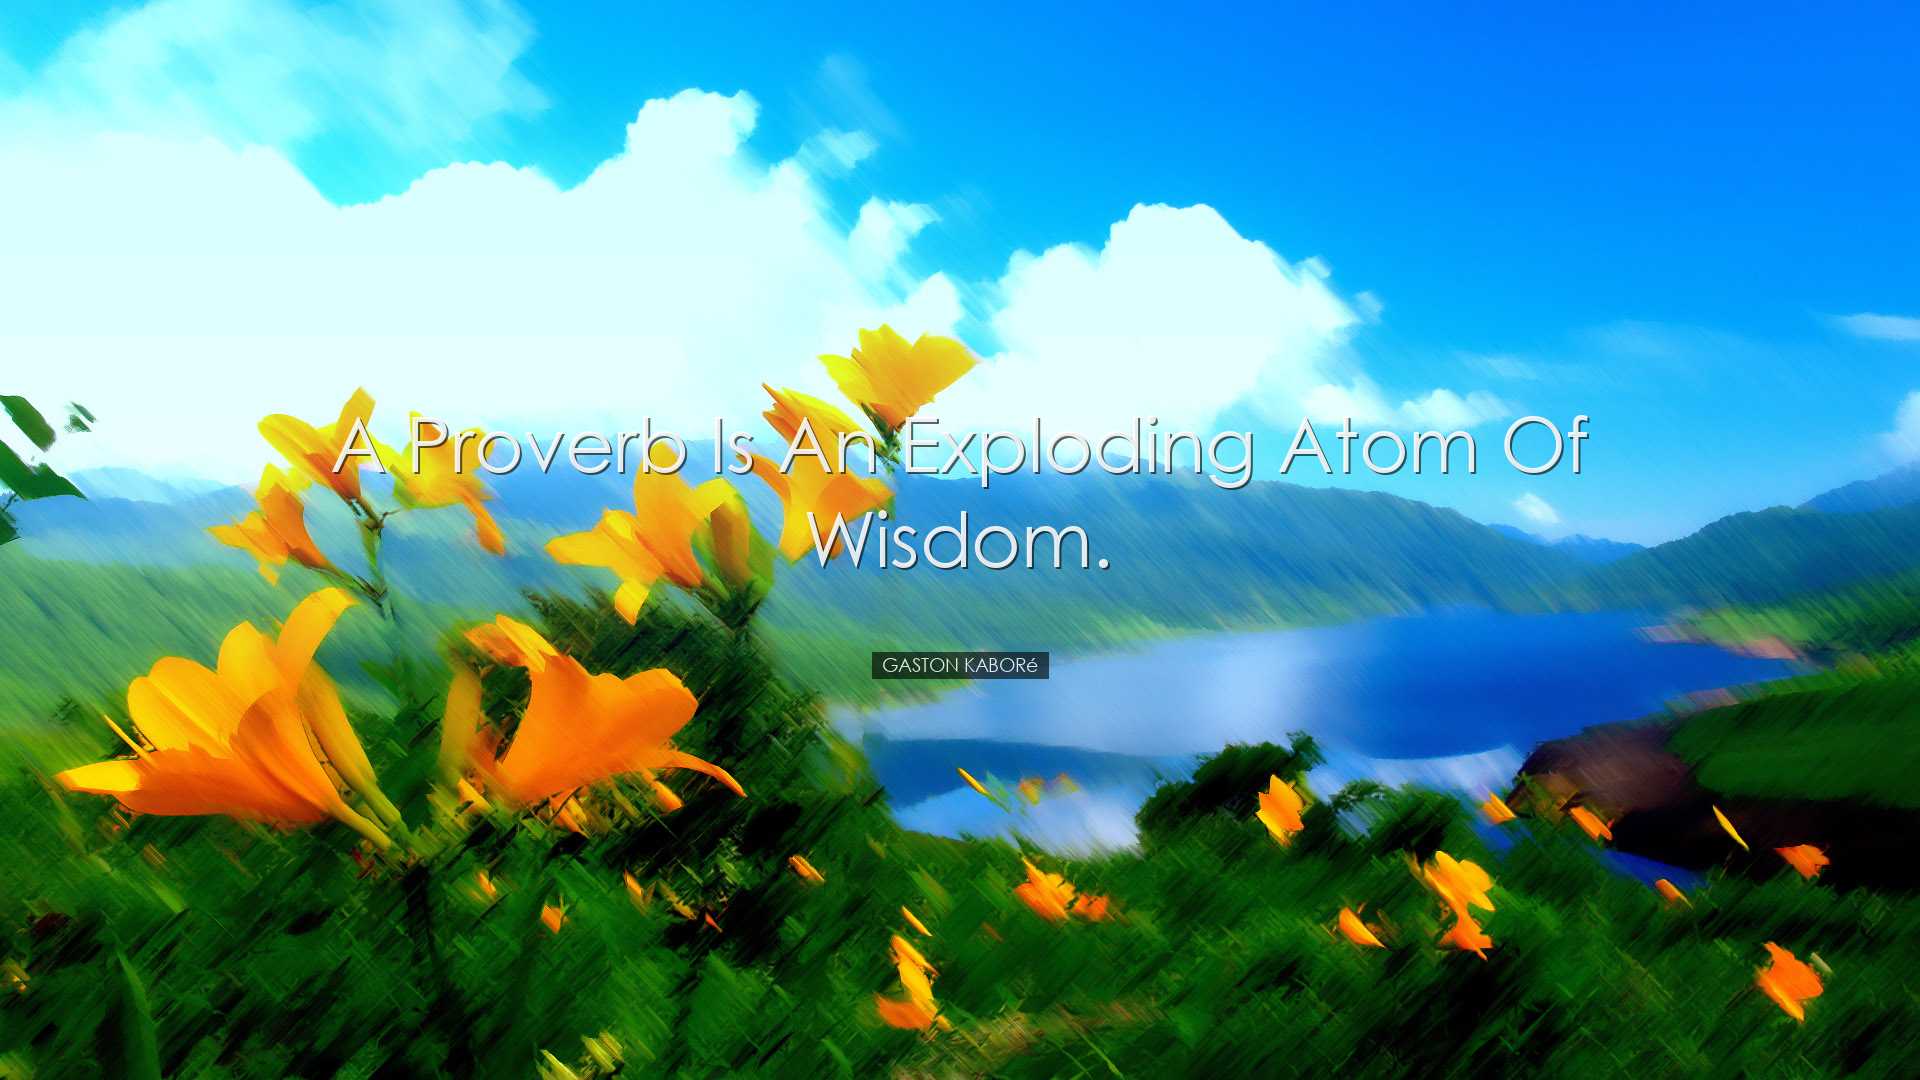 A proverb is an exploding atom of wisdom. - Gaston Kaboré